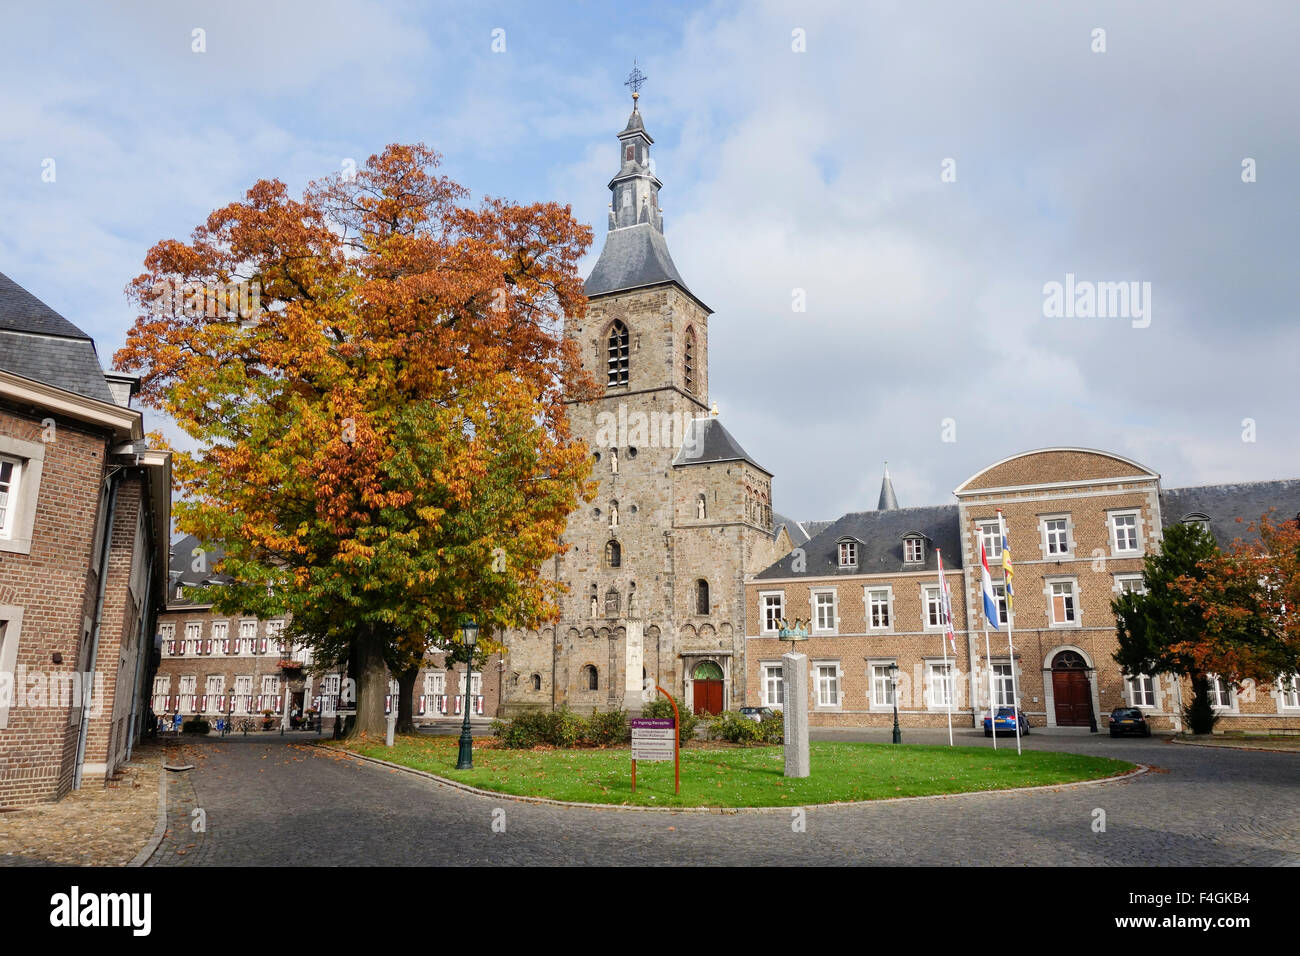 Rolduc abbazia medievale, Kerkrade, Limburgo, Paesi Bassi. Foto Stock